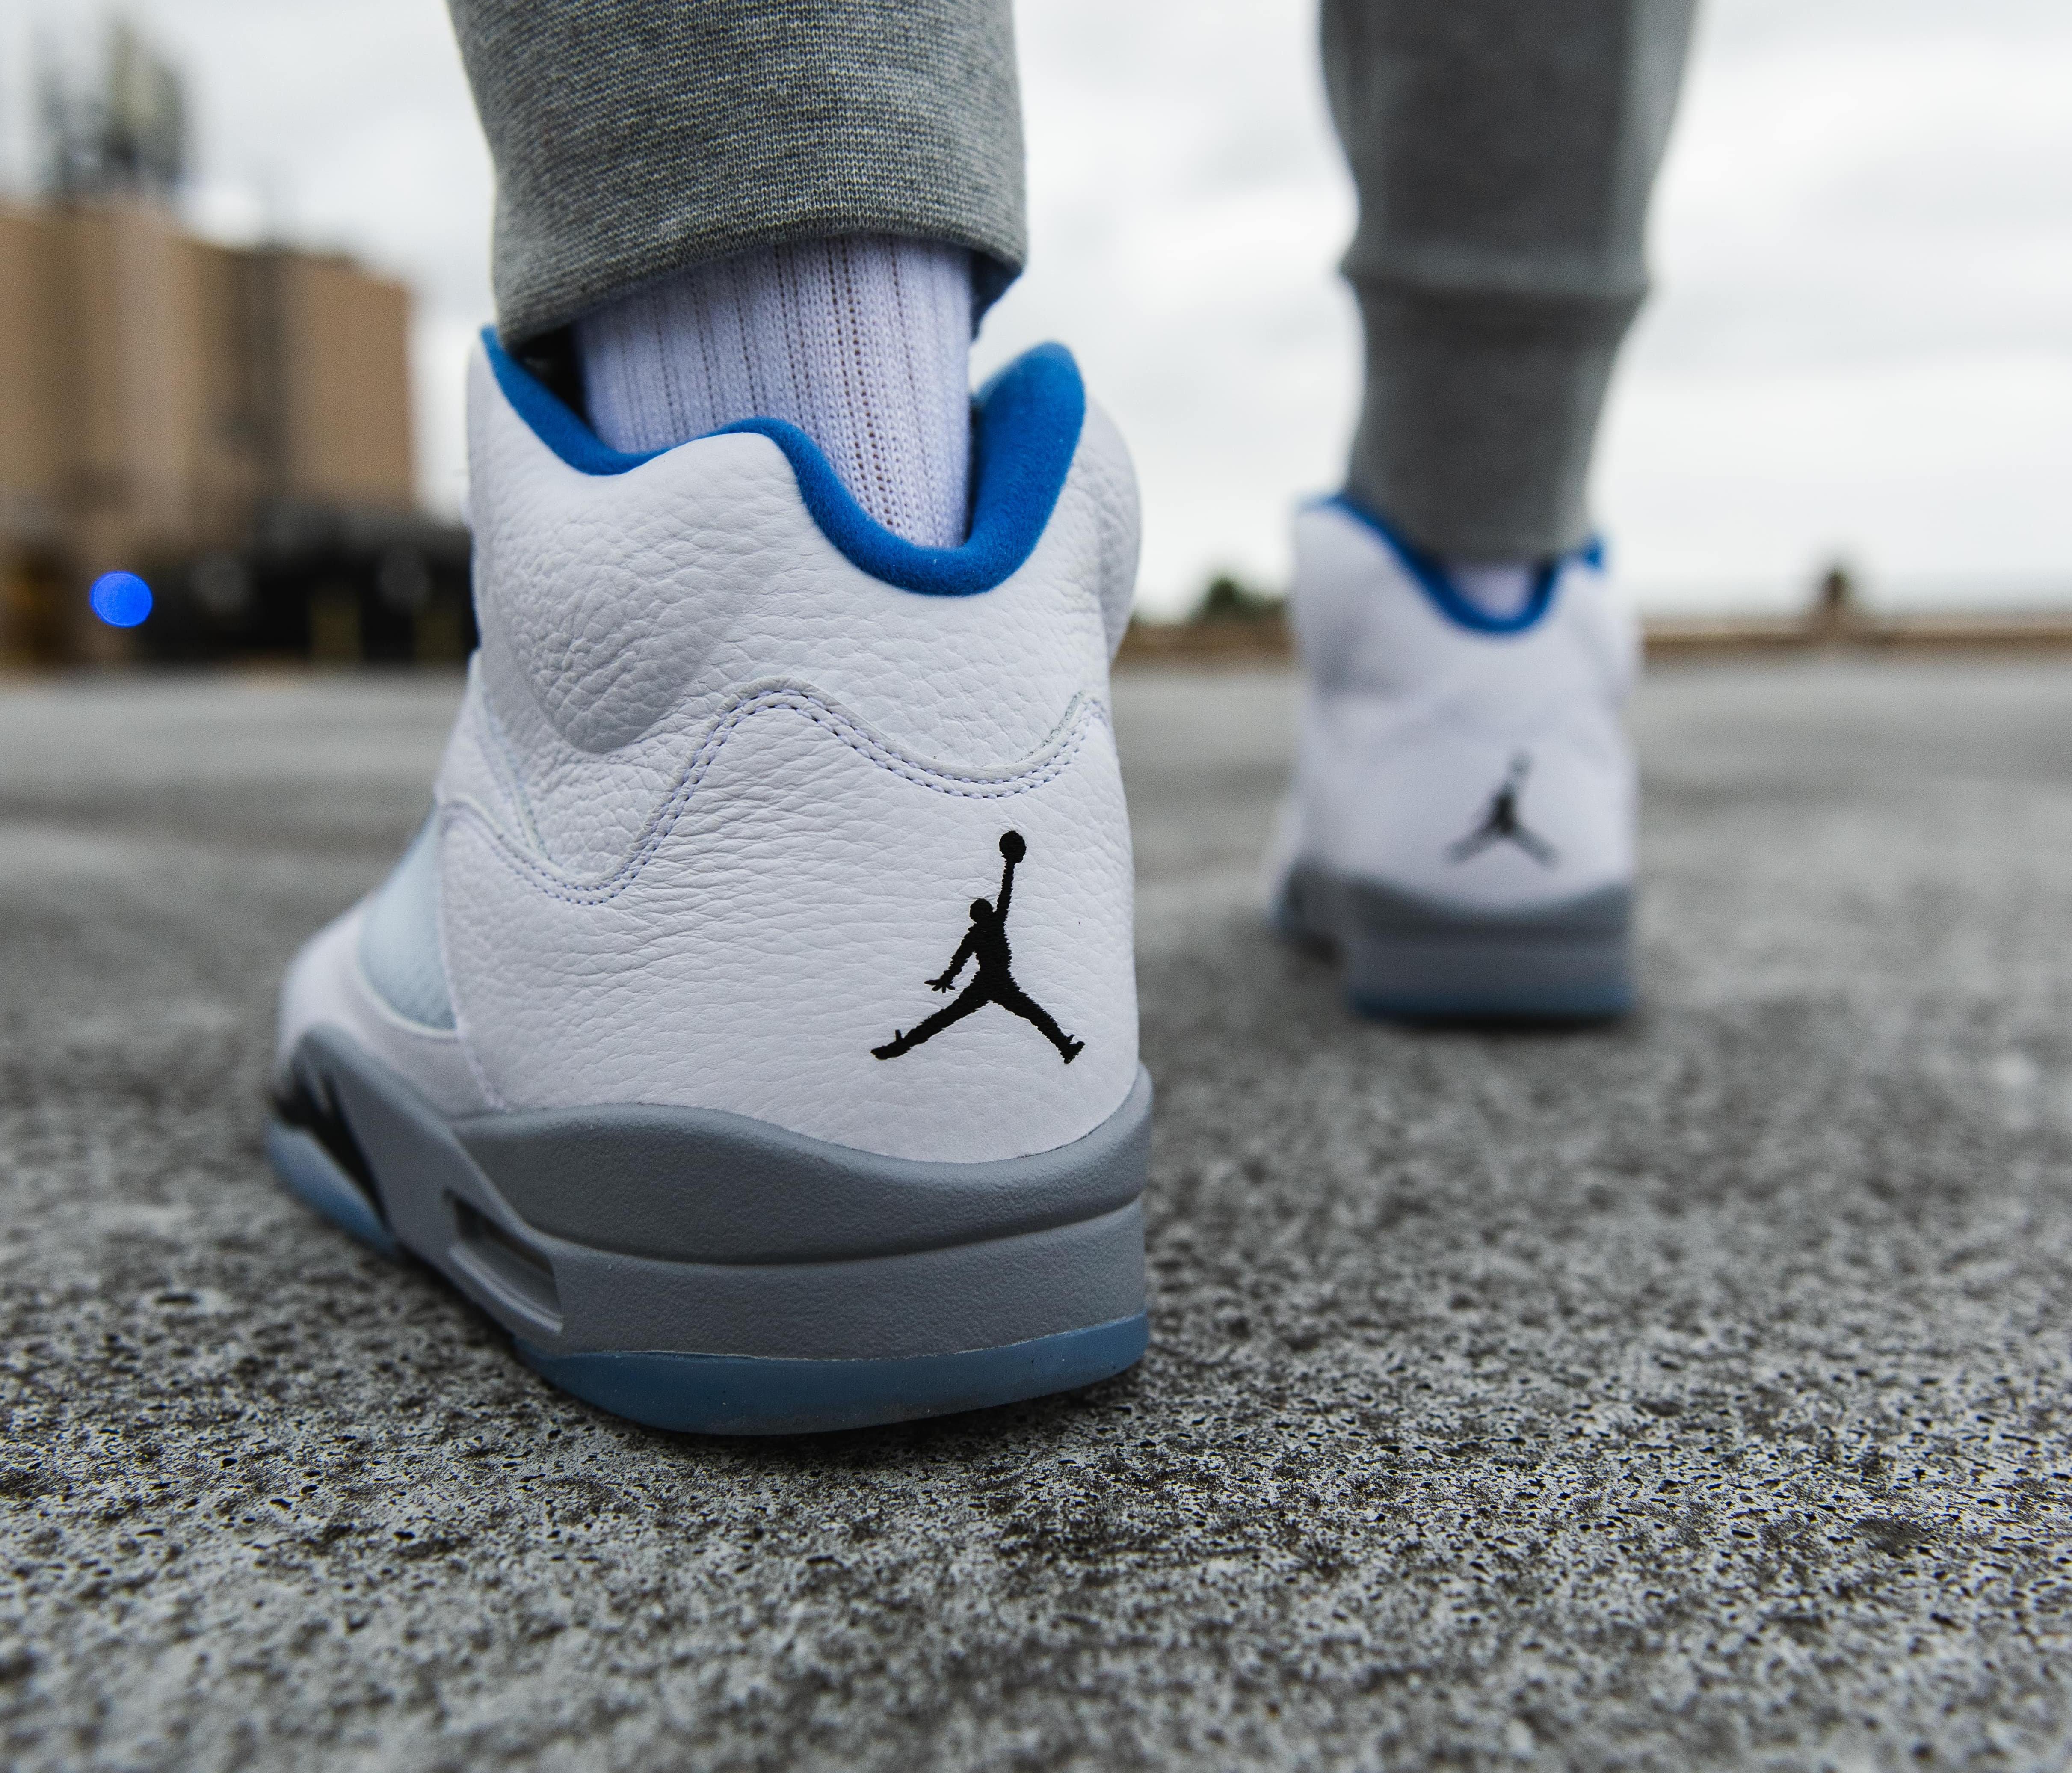 Sneakers Release – Jordan 5 Retro “Stealth 2.0” Colorway Drops 3/27